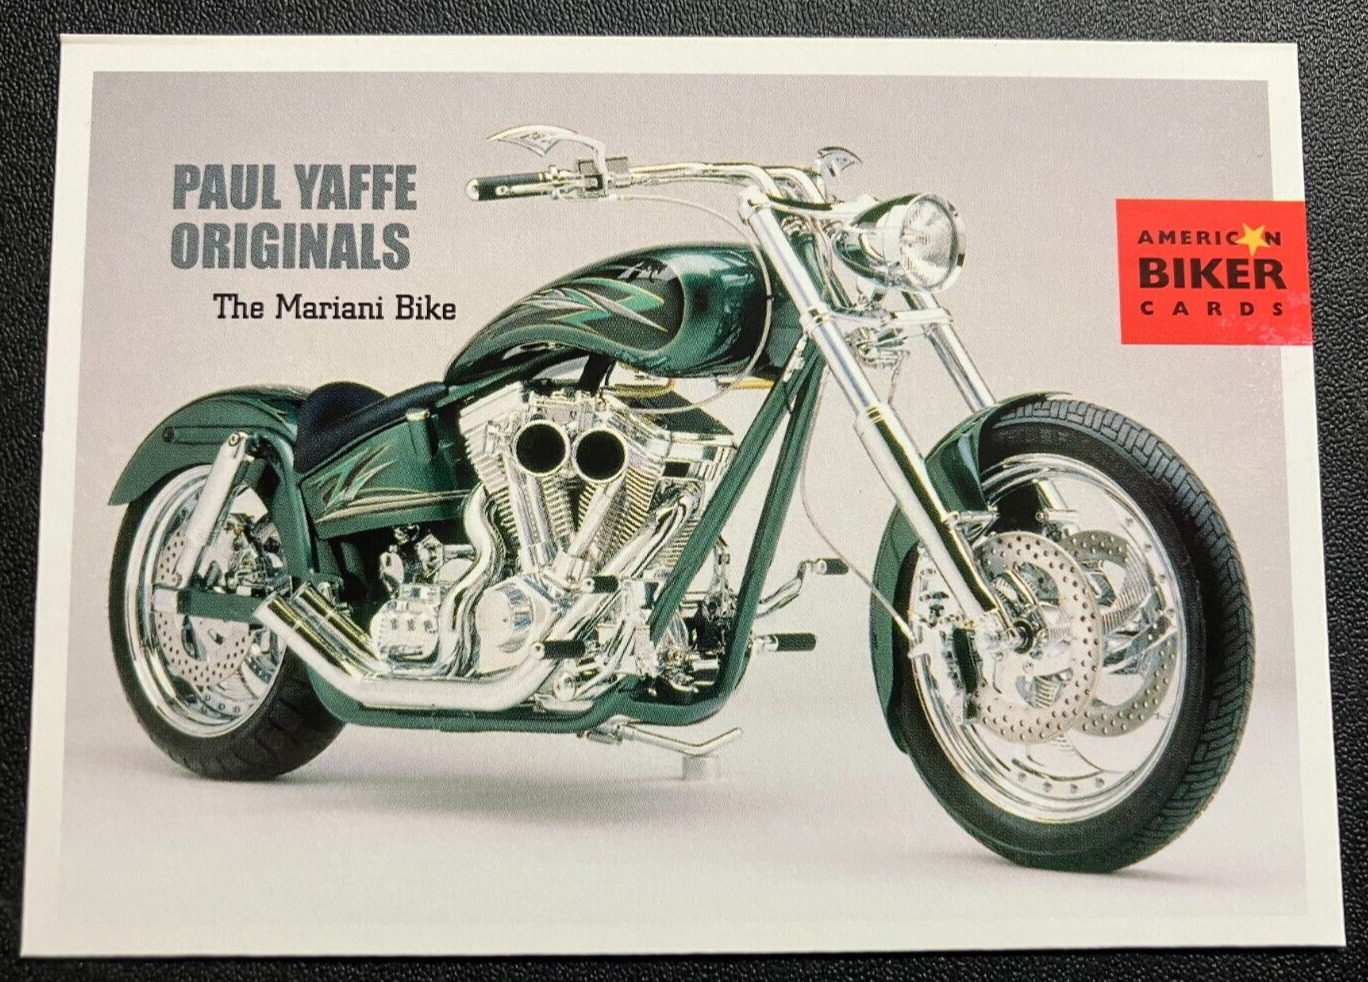 #95 The Mariani Bike by Paul Yaffe Originals - 2004 American Biker Trading Card